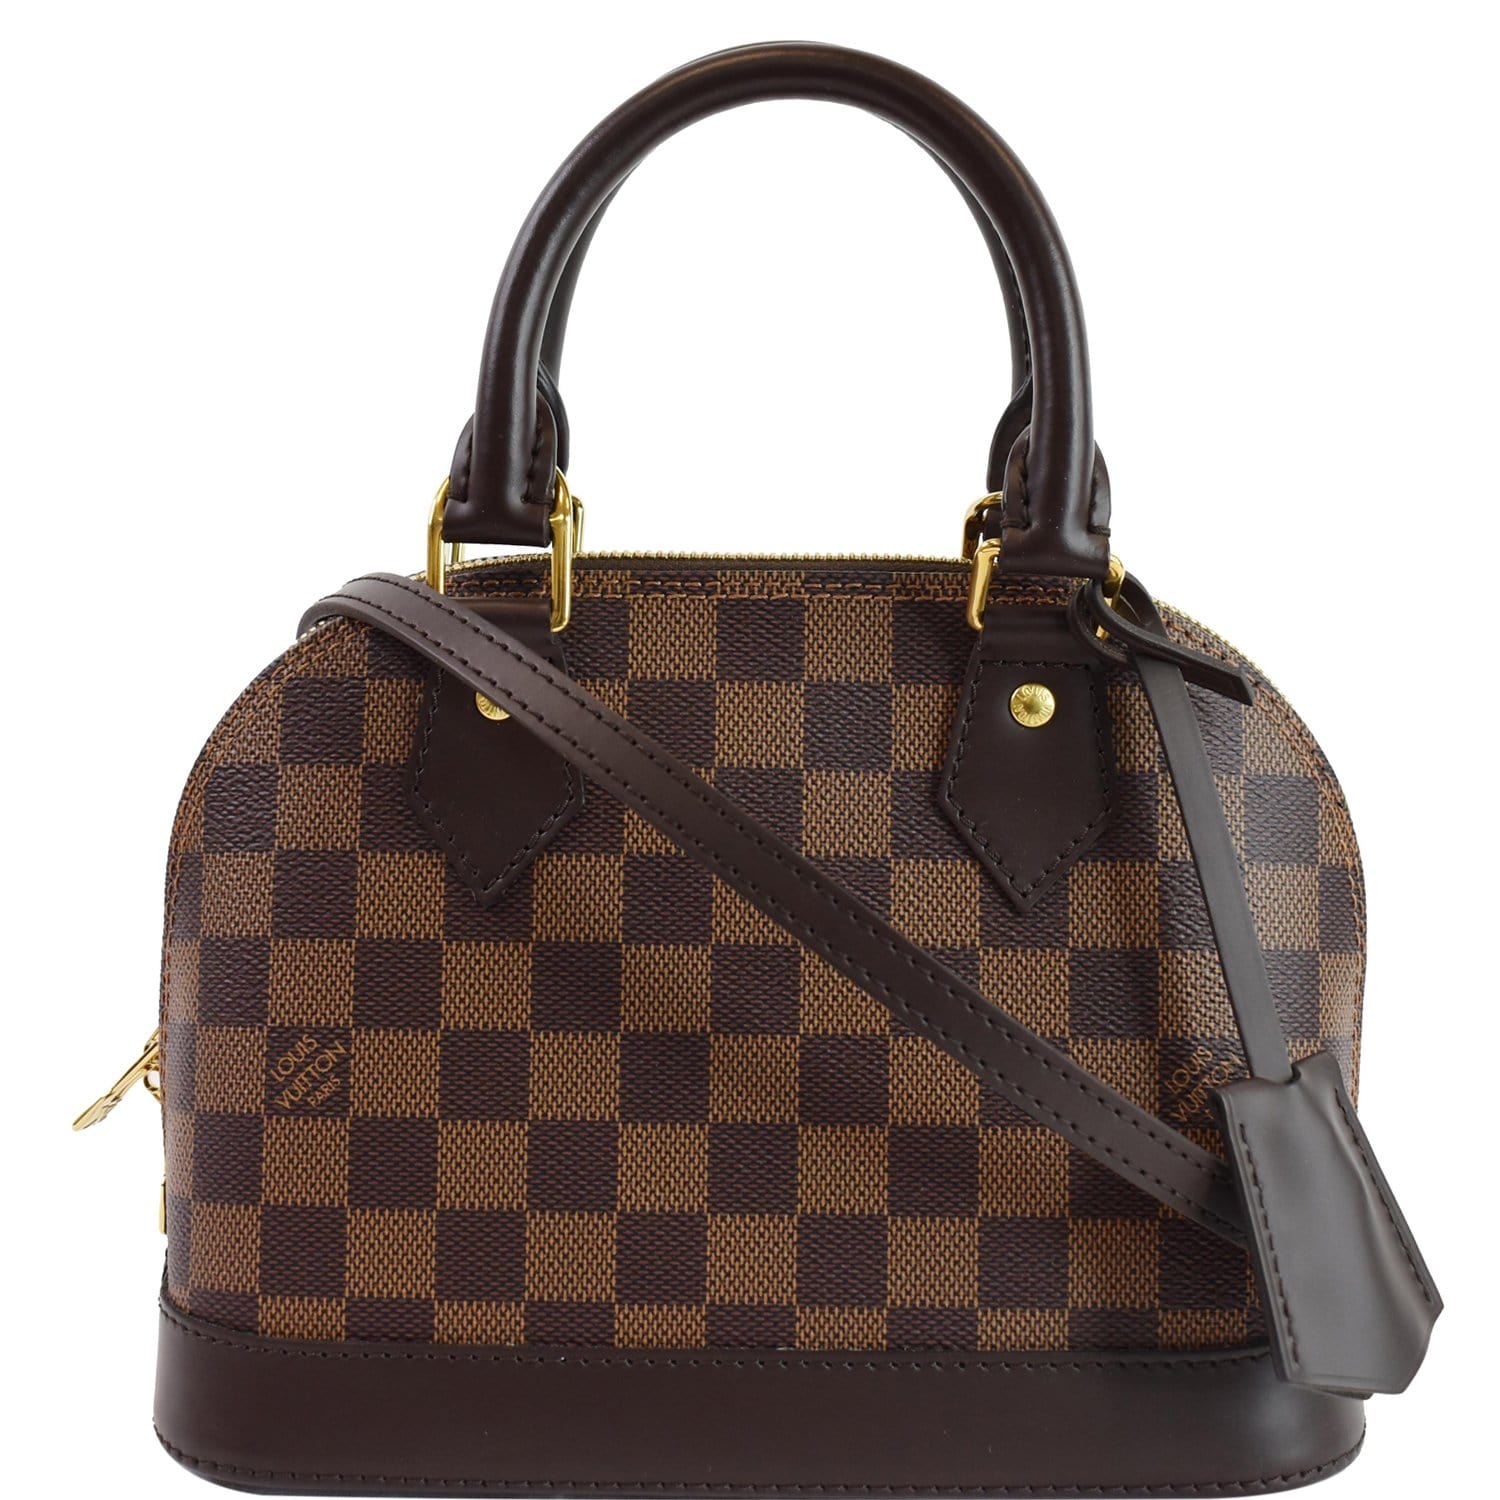 Louis Vuitton Alma Bag Look Alike